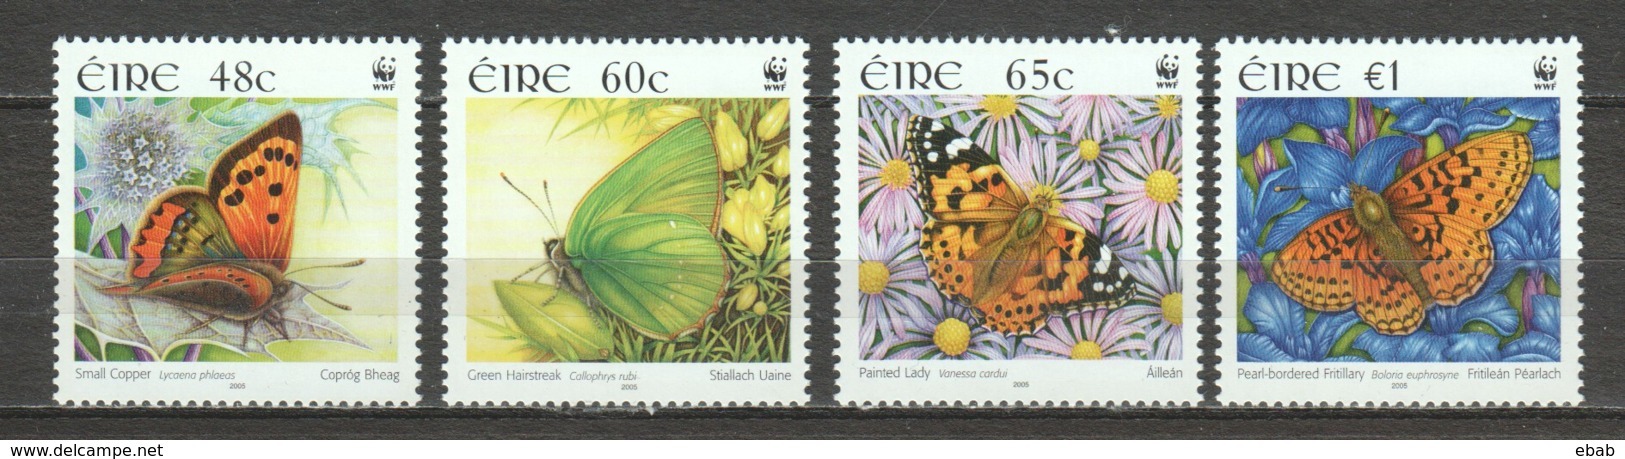 Ireland Eire 2005 Mi 1652-1655 MNH WWF - BUTTERFLIES - Nuevos